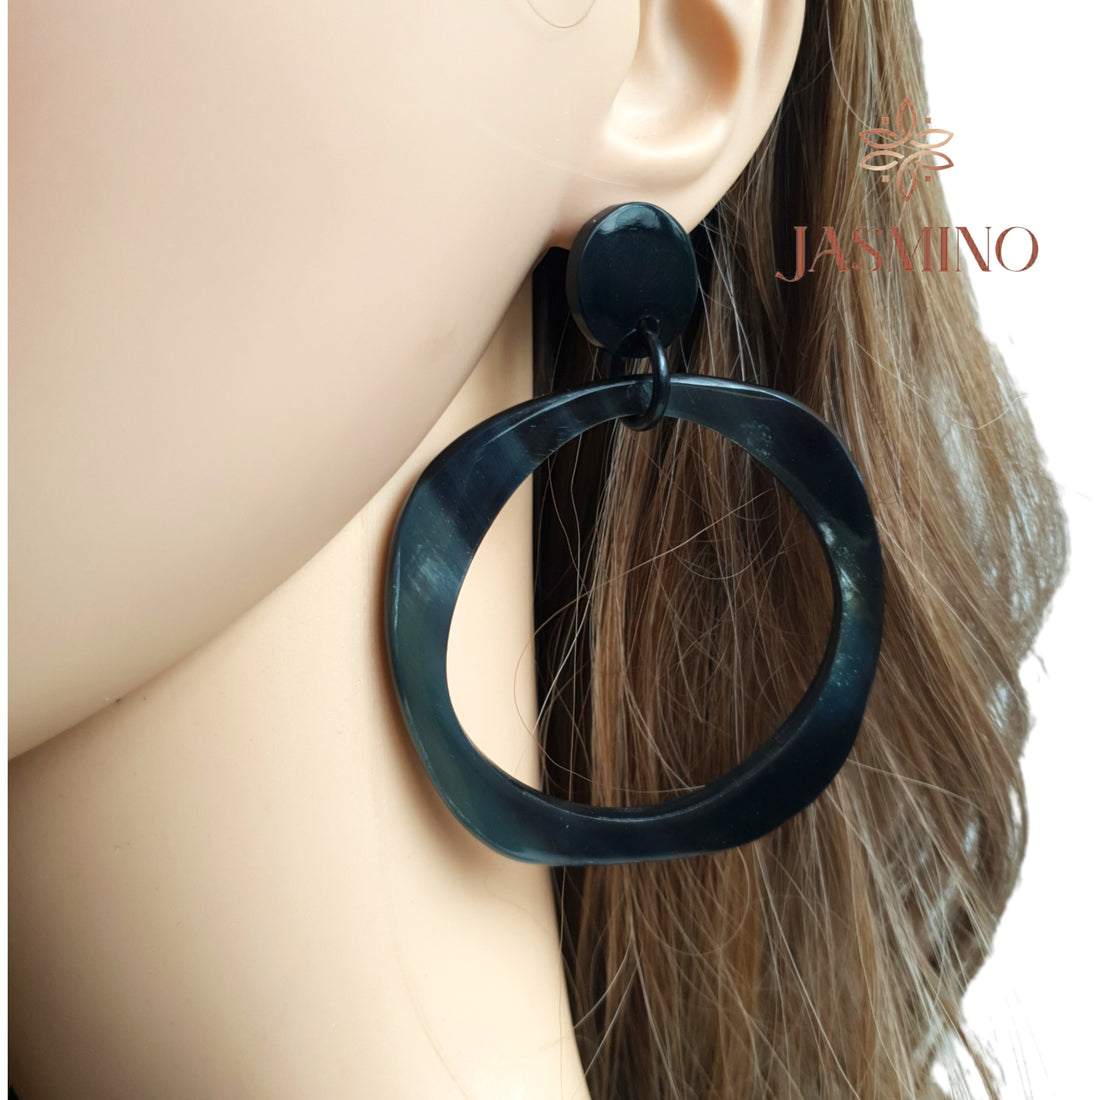 Black Organic Horn Earrings, Crooked Circle Stud Earrings. Jasmino Jewelry, Unique Gift.